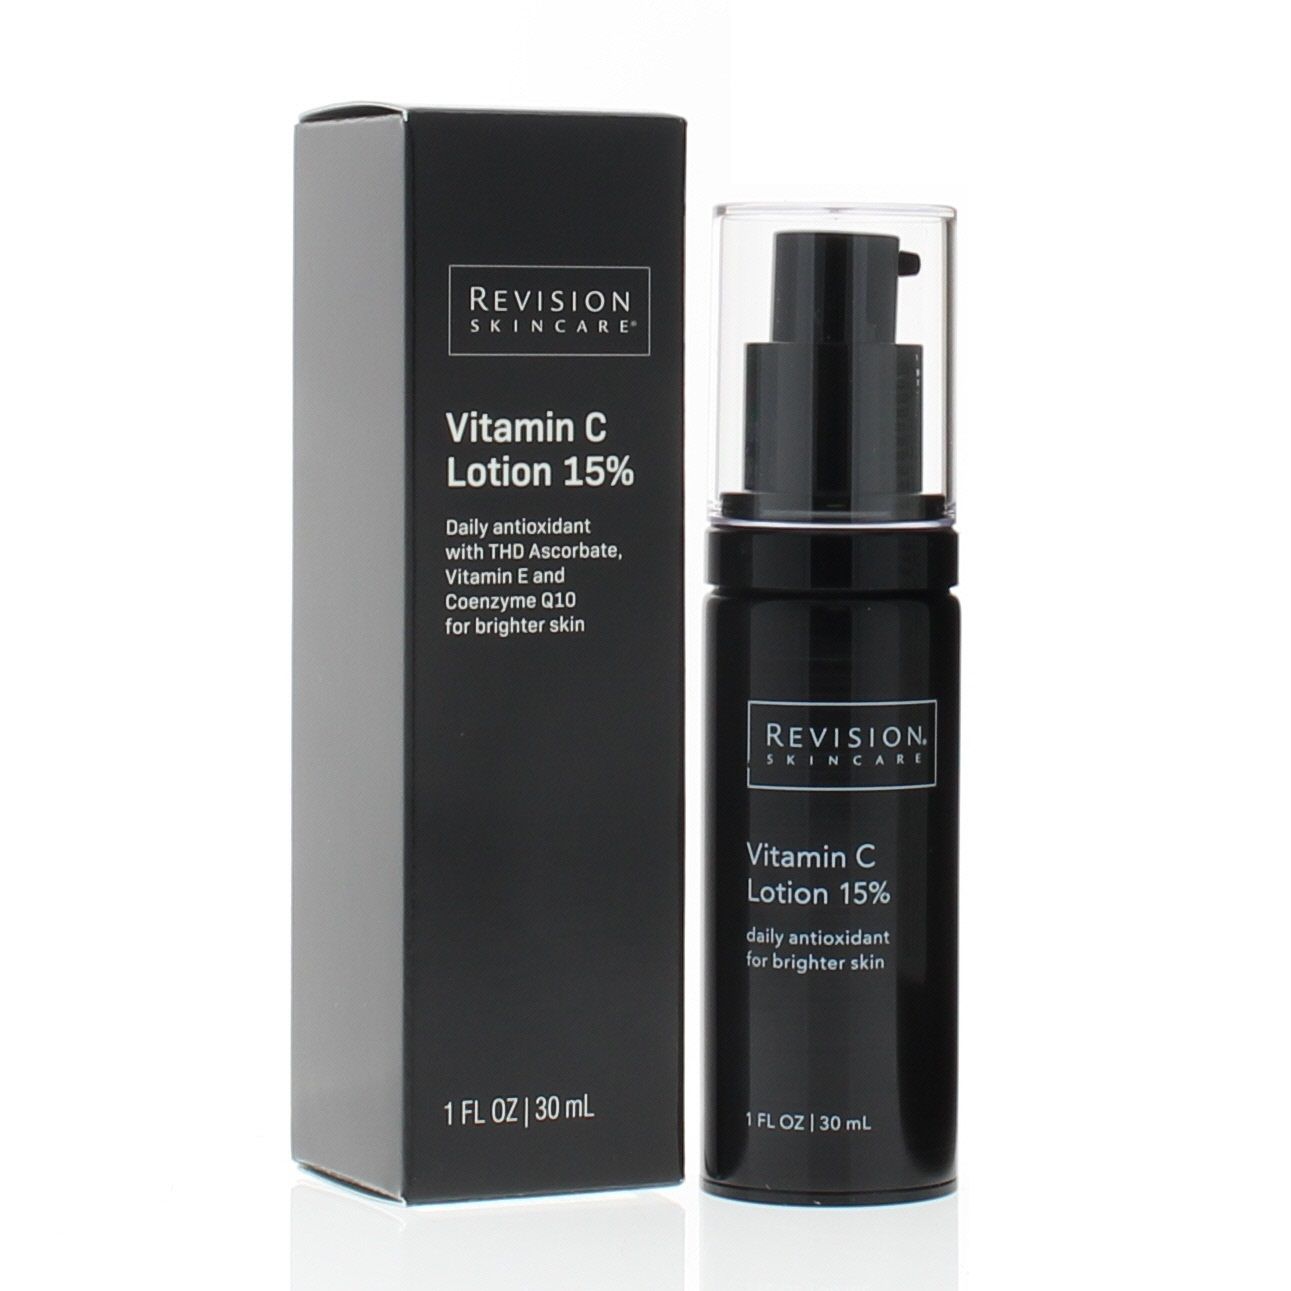 Revision Skincare Vitamin C Lotion 15% 1oz/30ml - image 1 of 6